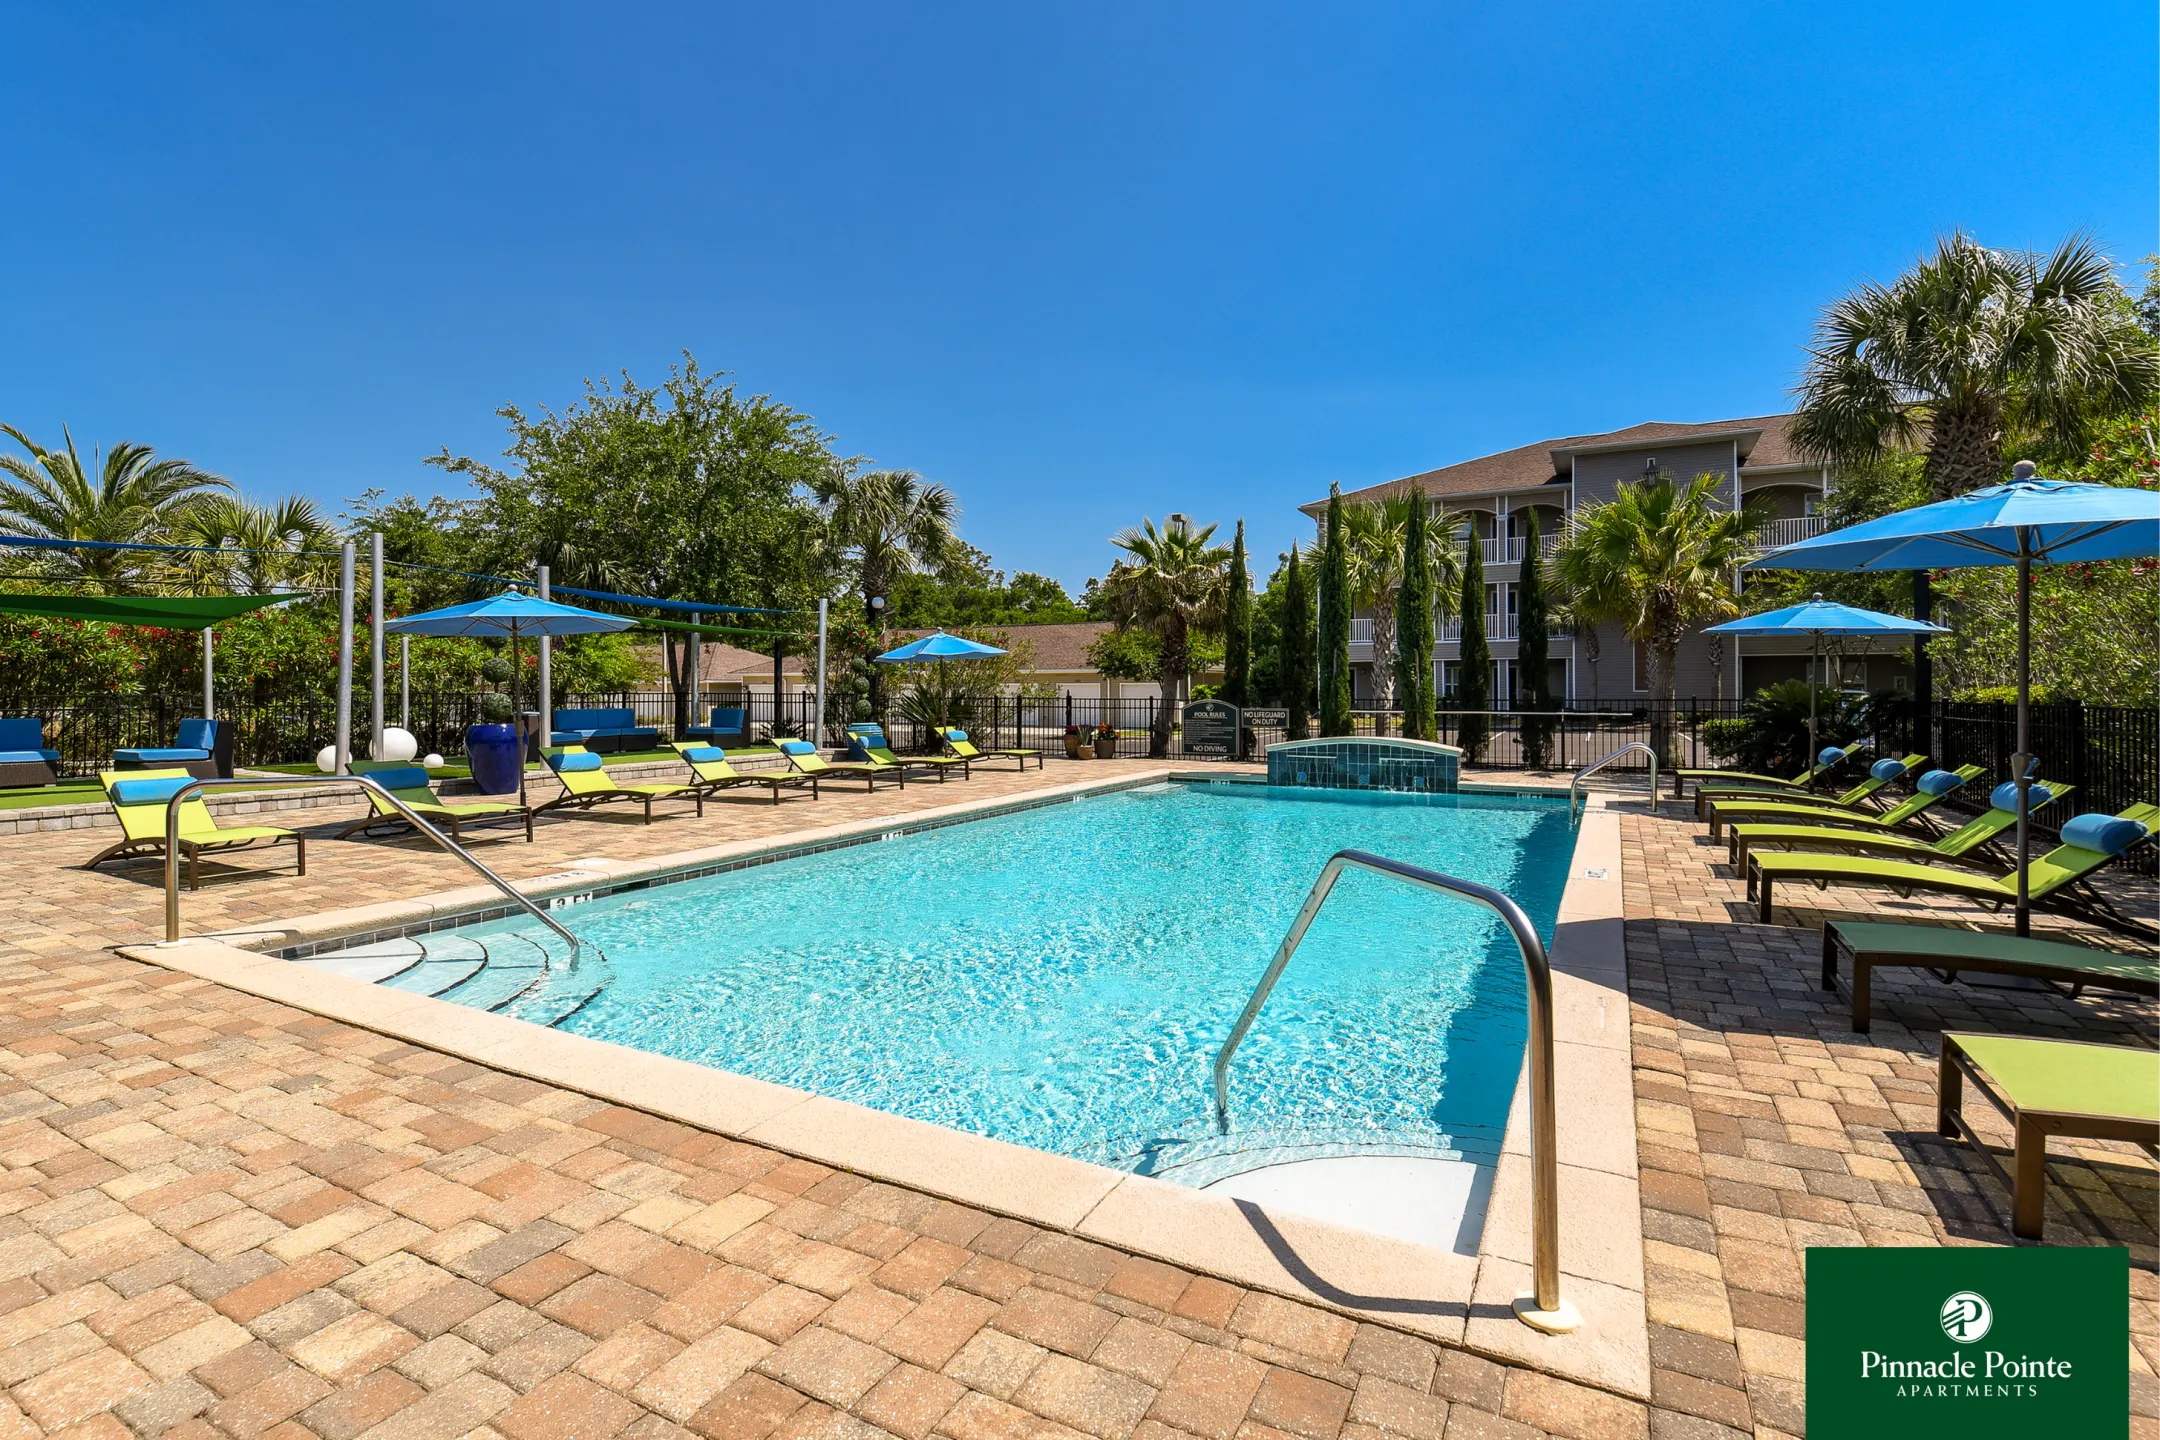 Pool - Pinnacle Pointe Apartments - Crestview, FL